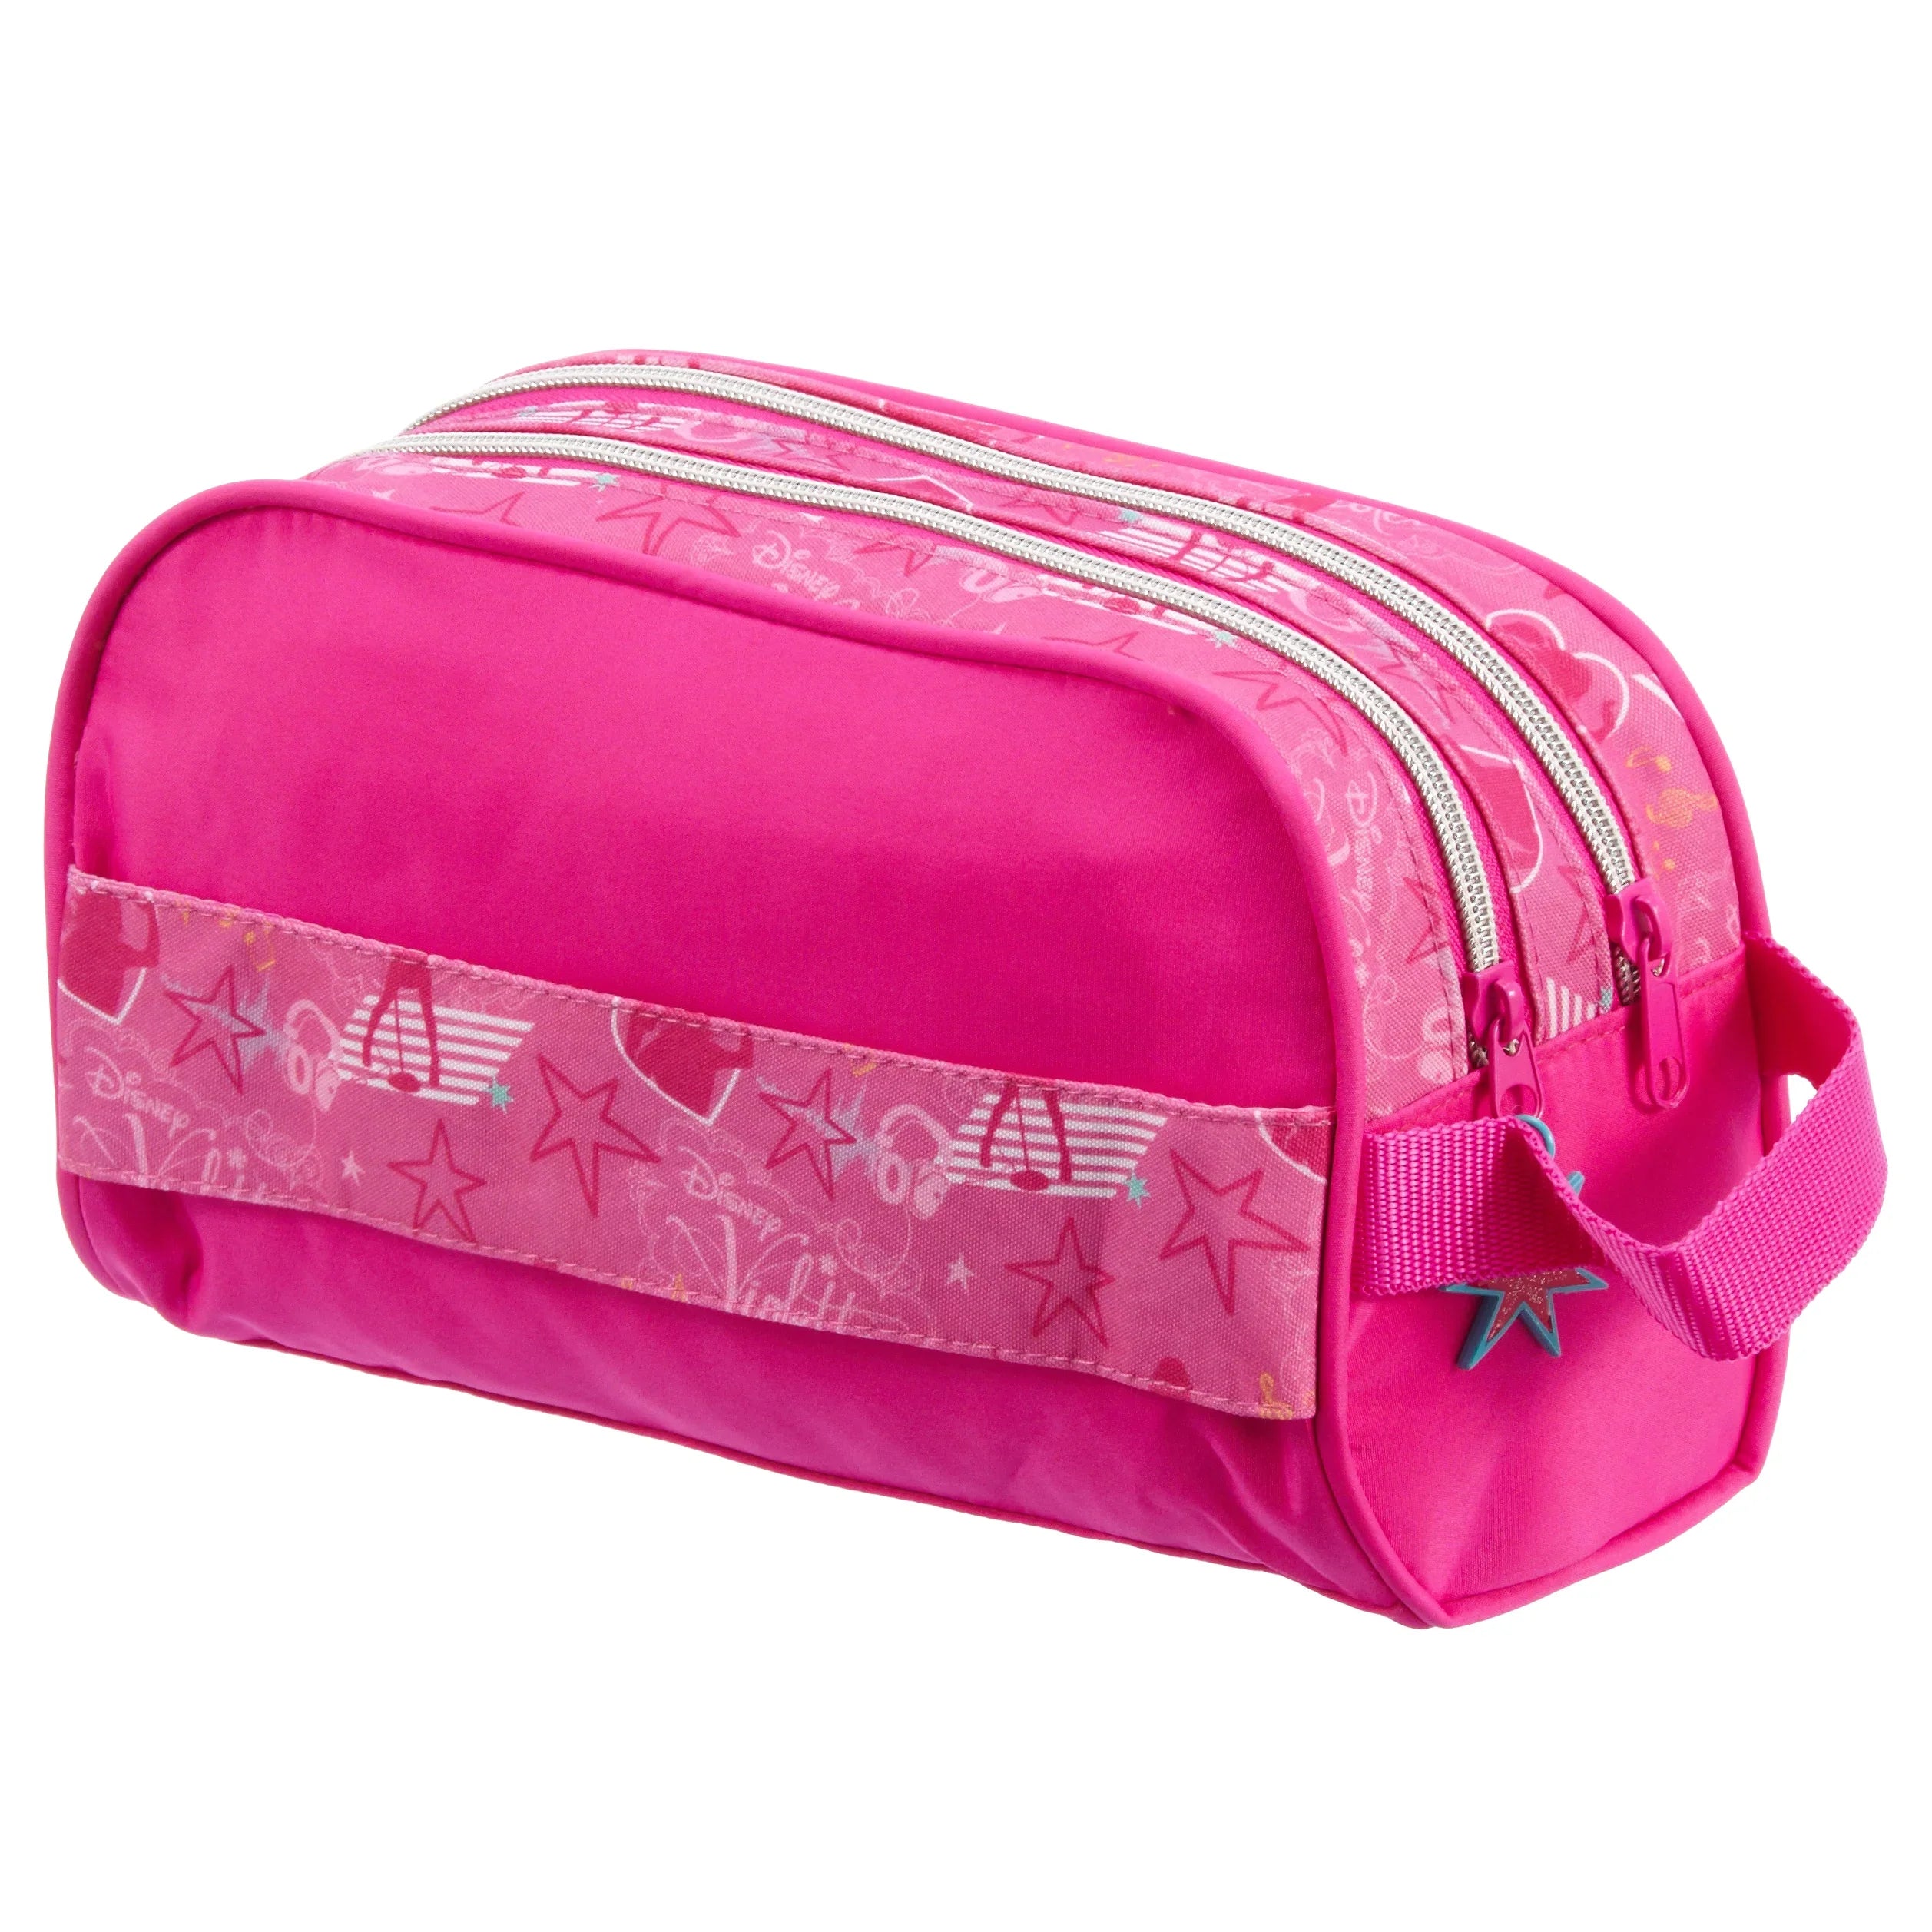 Disney Violetta Star Beauty Case 26 cm - rosa